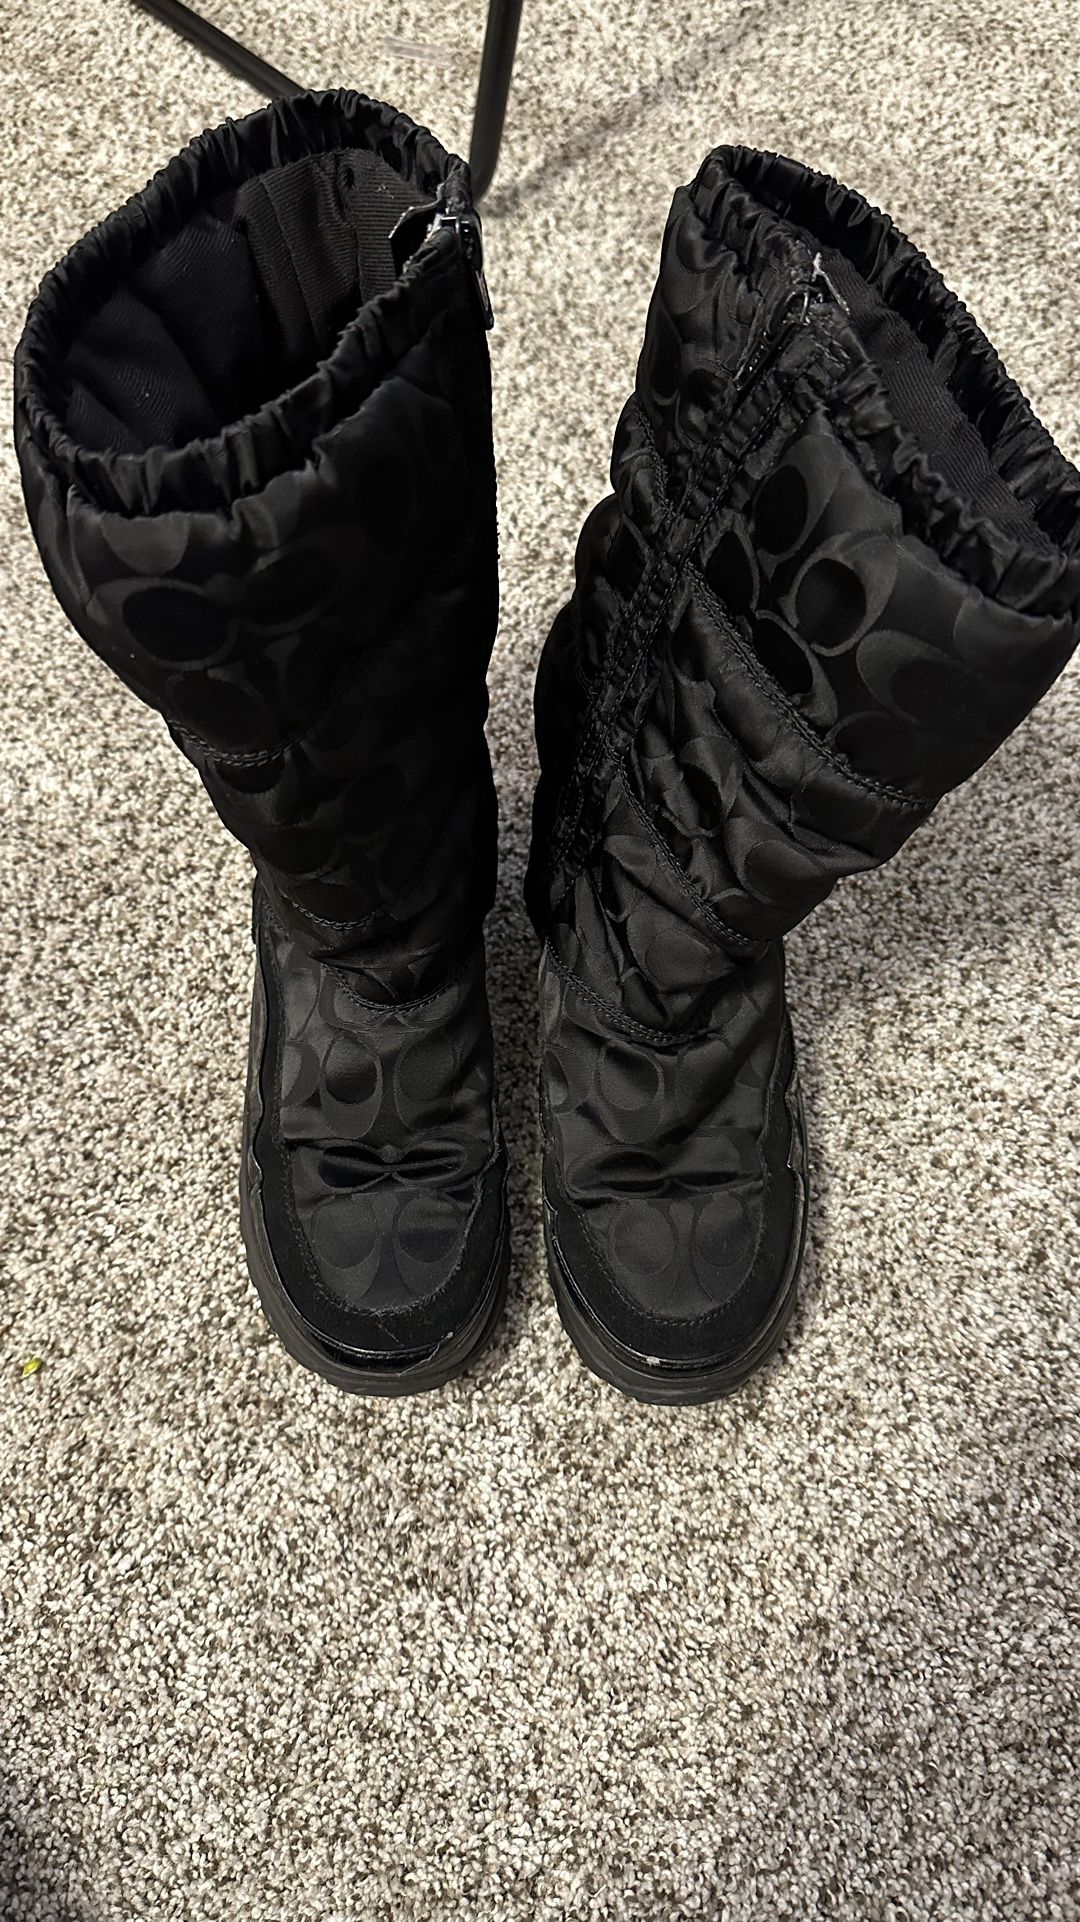 Coachw Snow Boots Womens Black Signature Sz 7.5